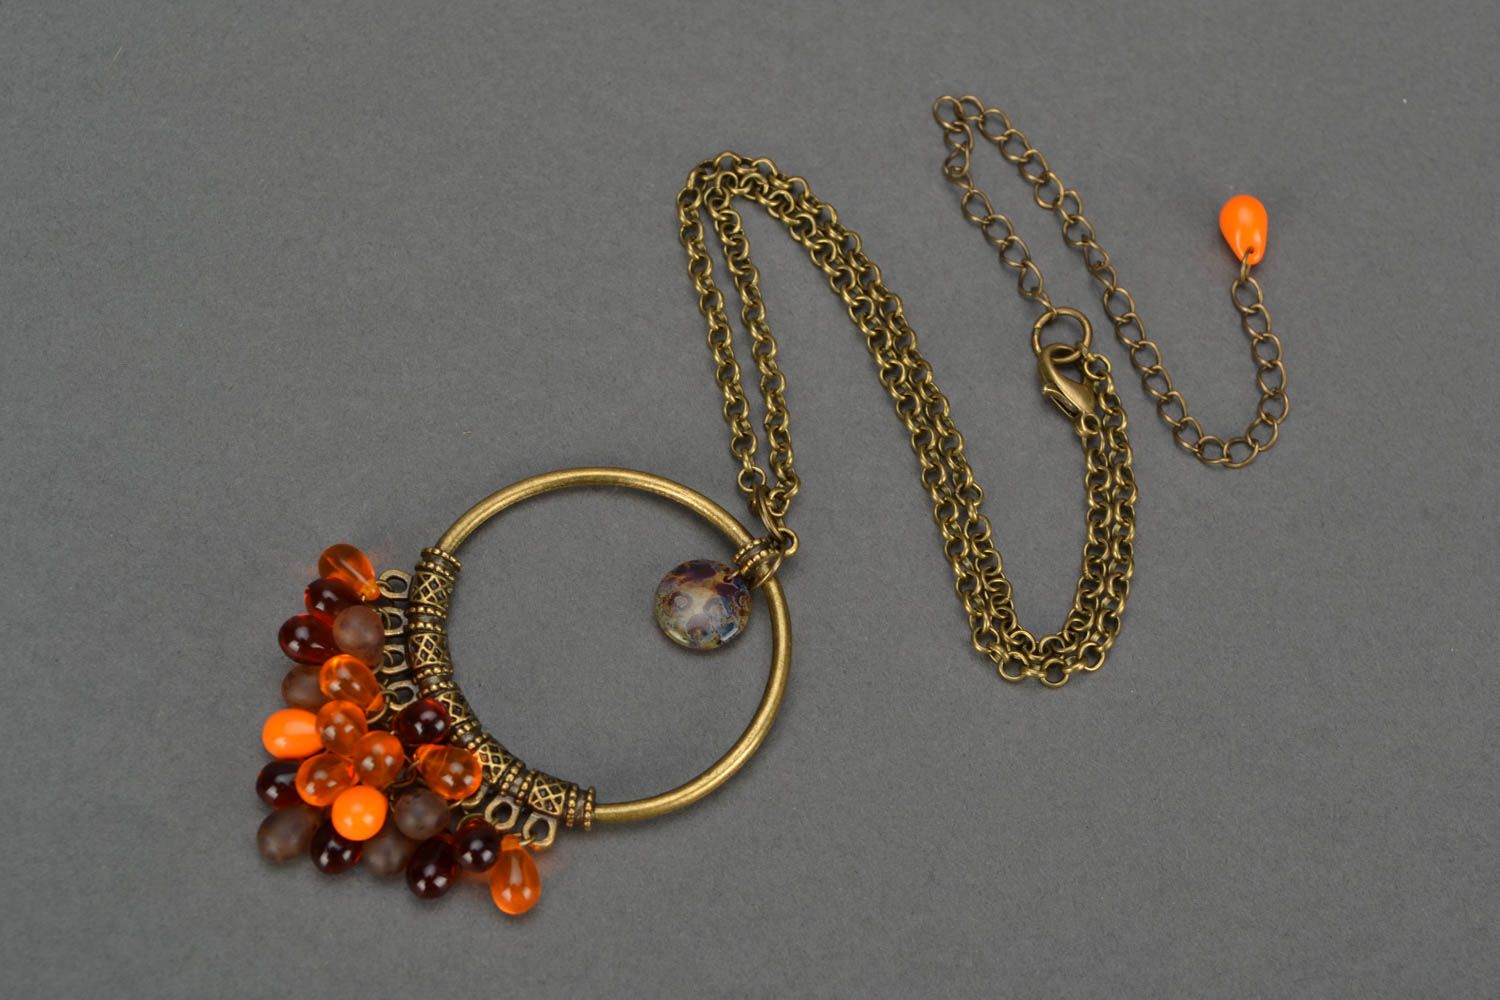 Handmade glass pendant with beads on a chain beautiful stylish designer jewelry photo 1